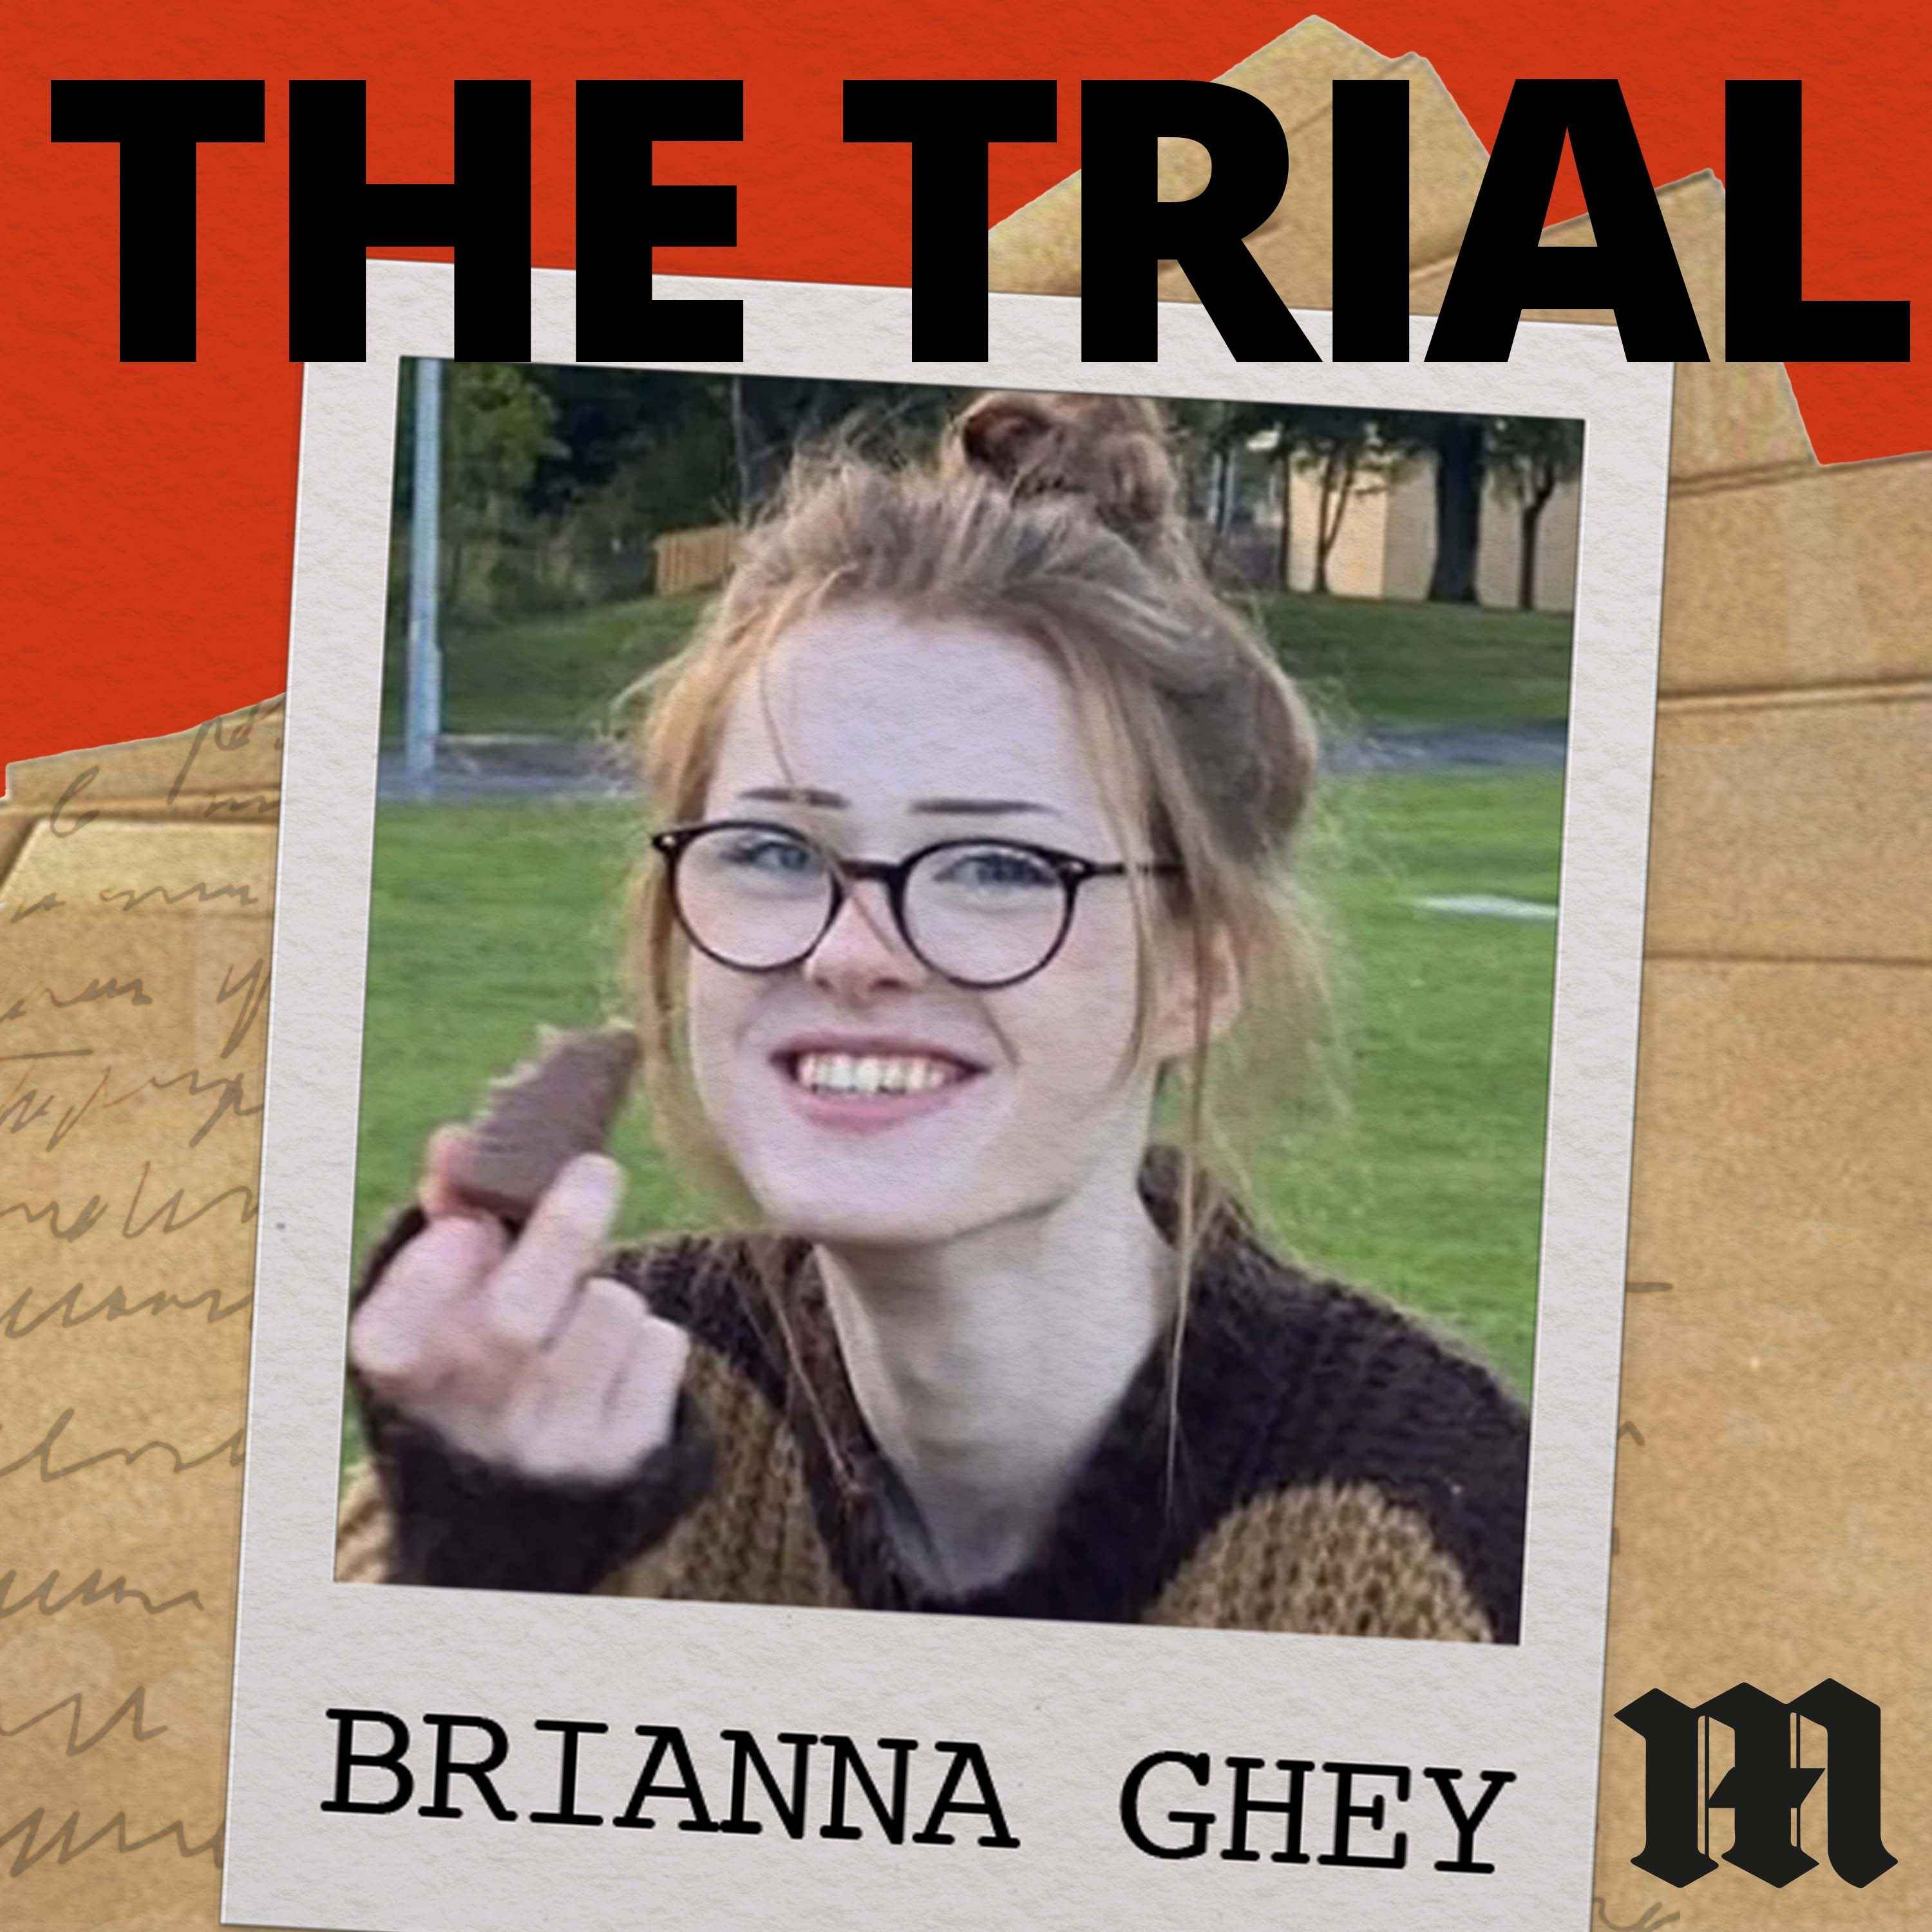 Brianna Ghey: The joke that went too far